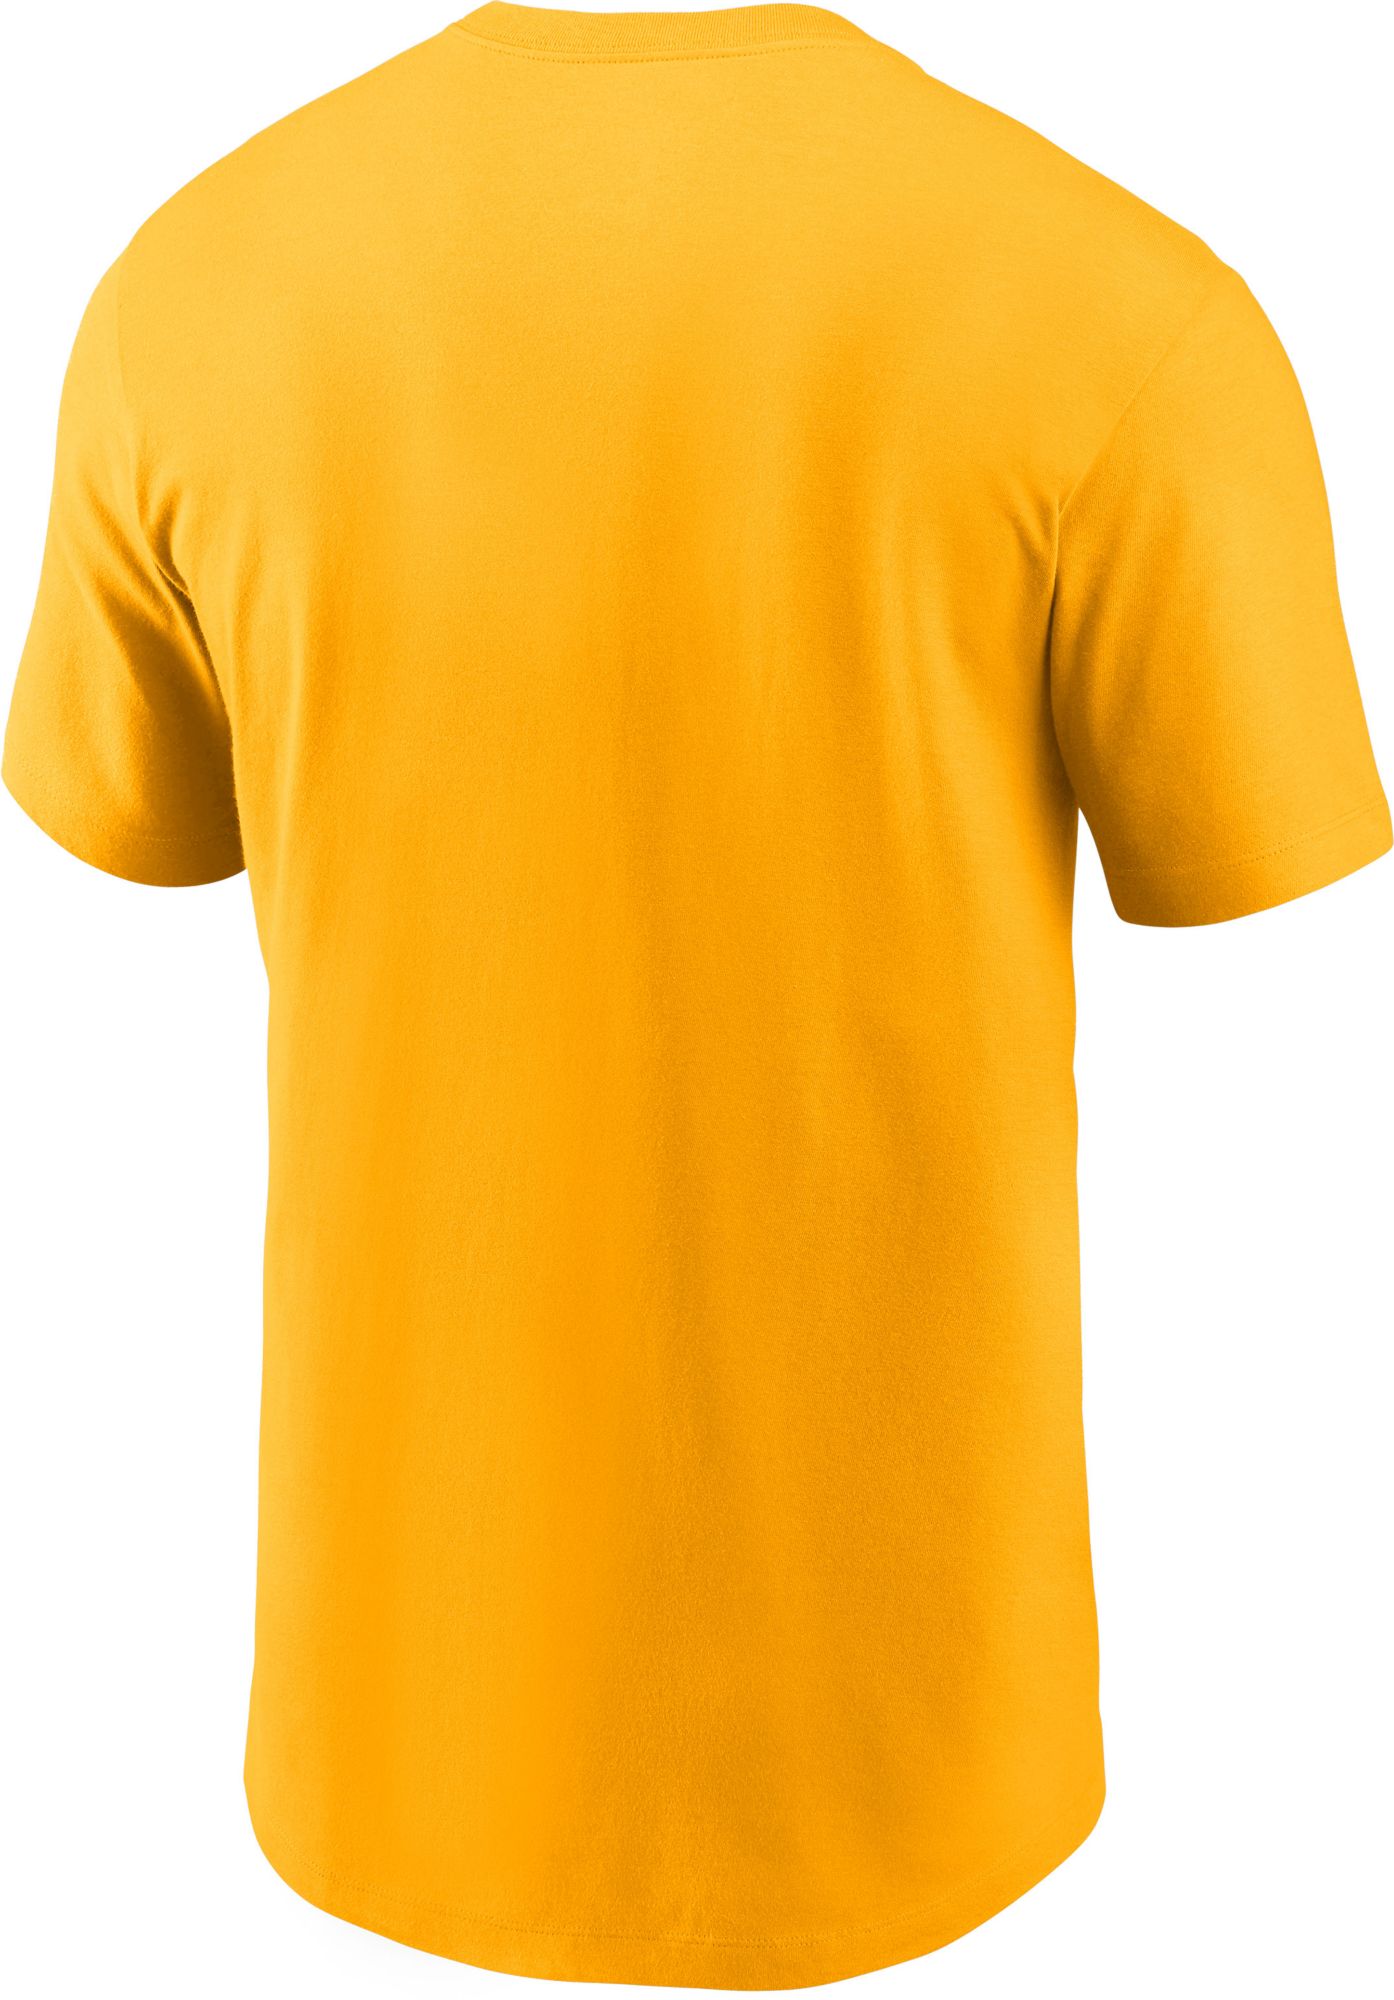 Men's Yellow Shirts  DICK'S Sporting Goods